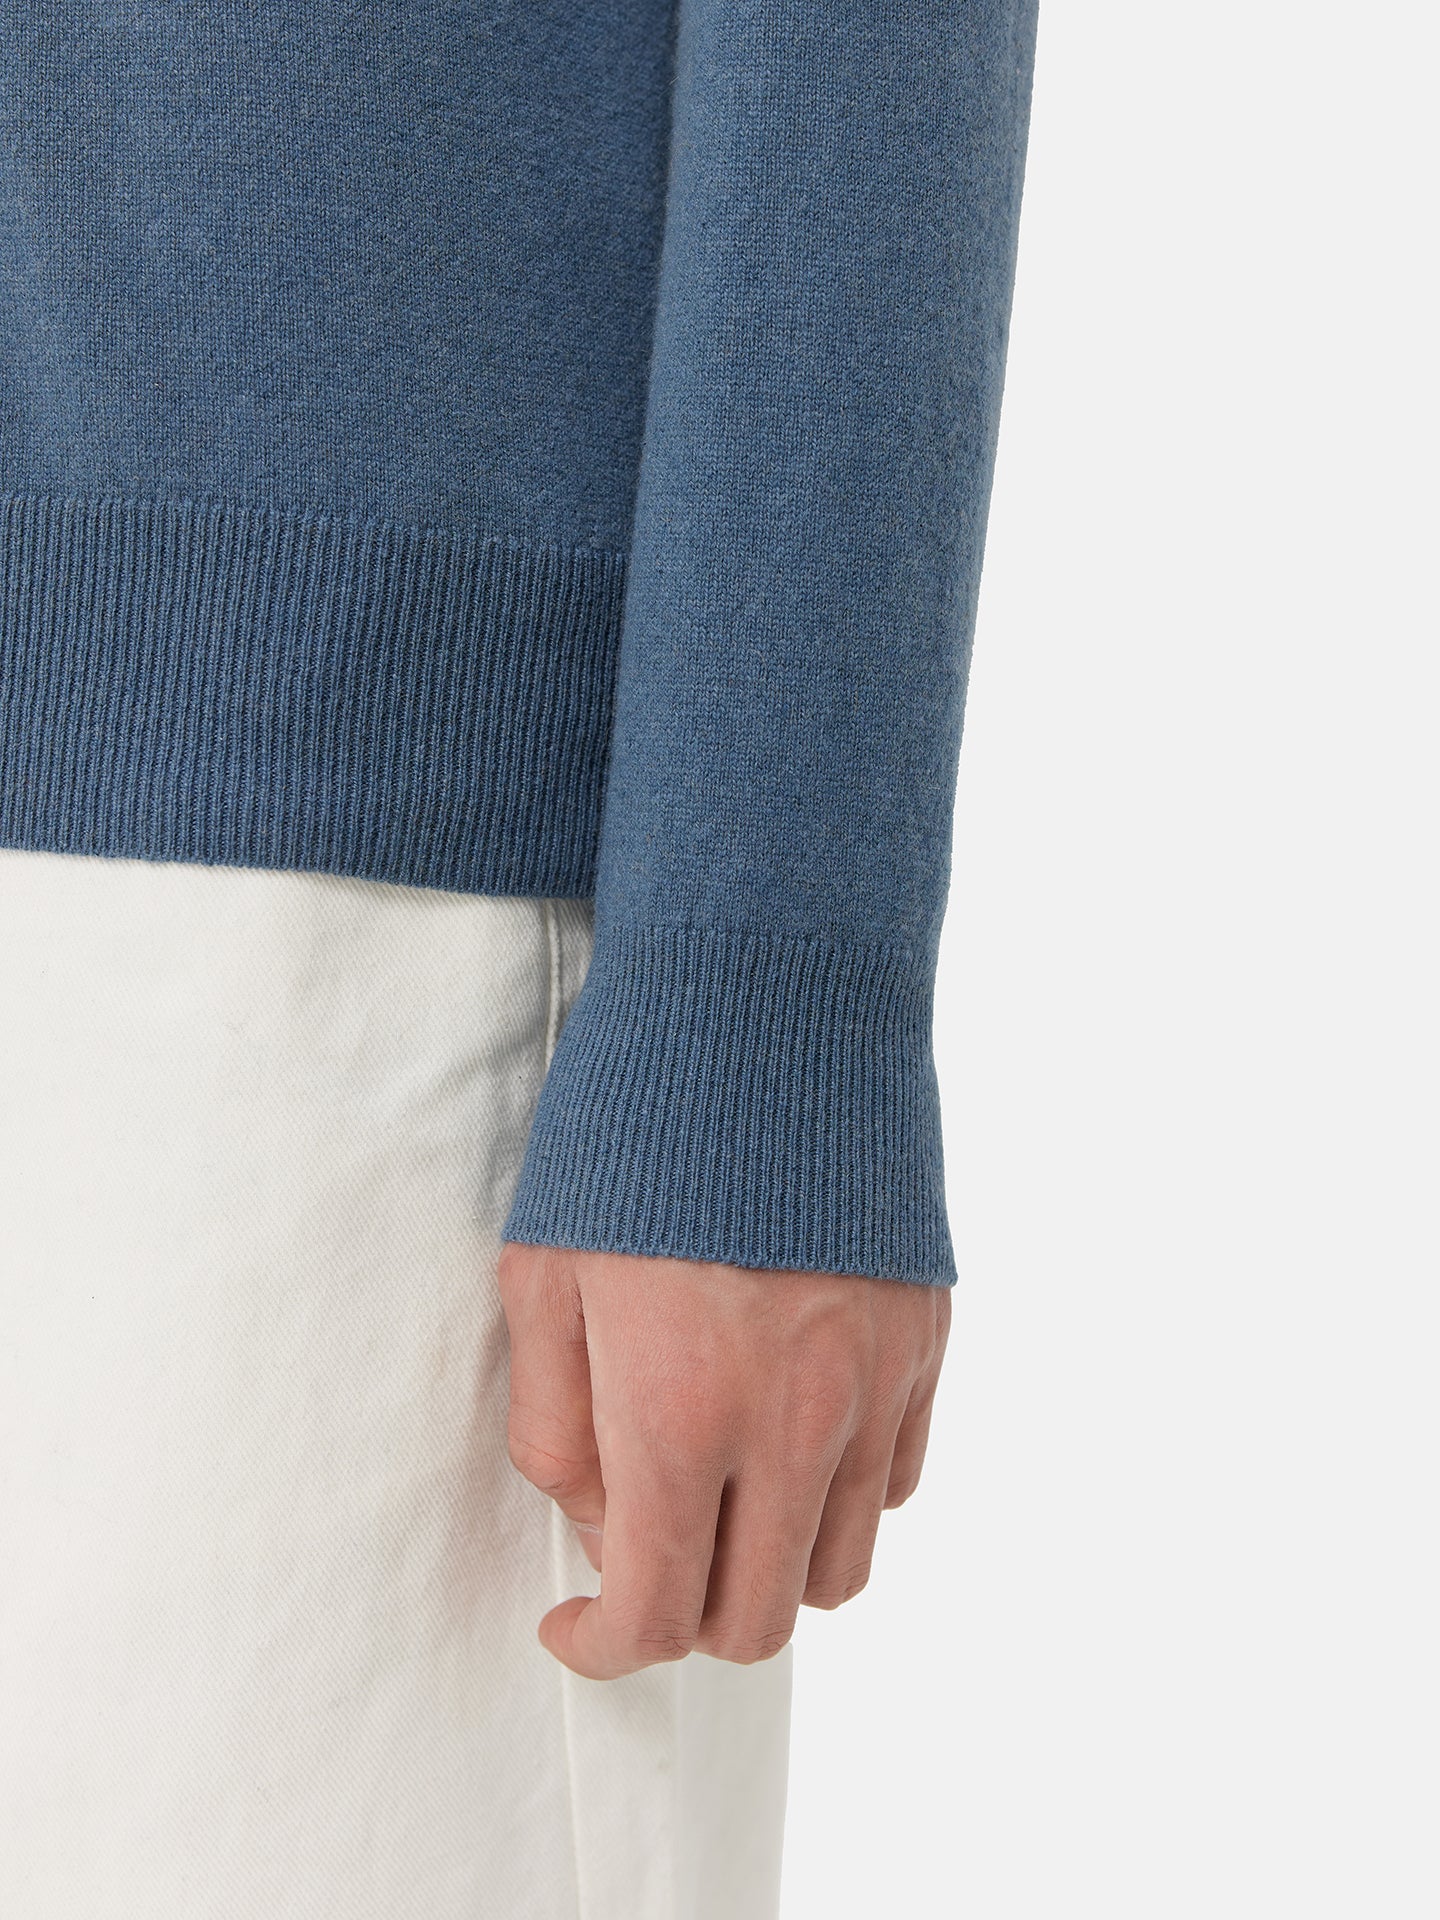 Men's Double-Neckline Cashmere Sweater China Blue - Gobi Cashmere